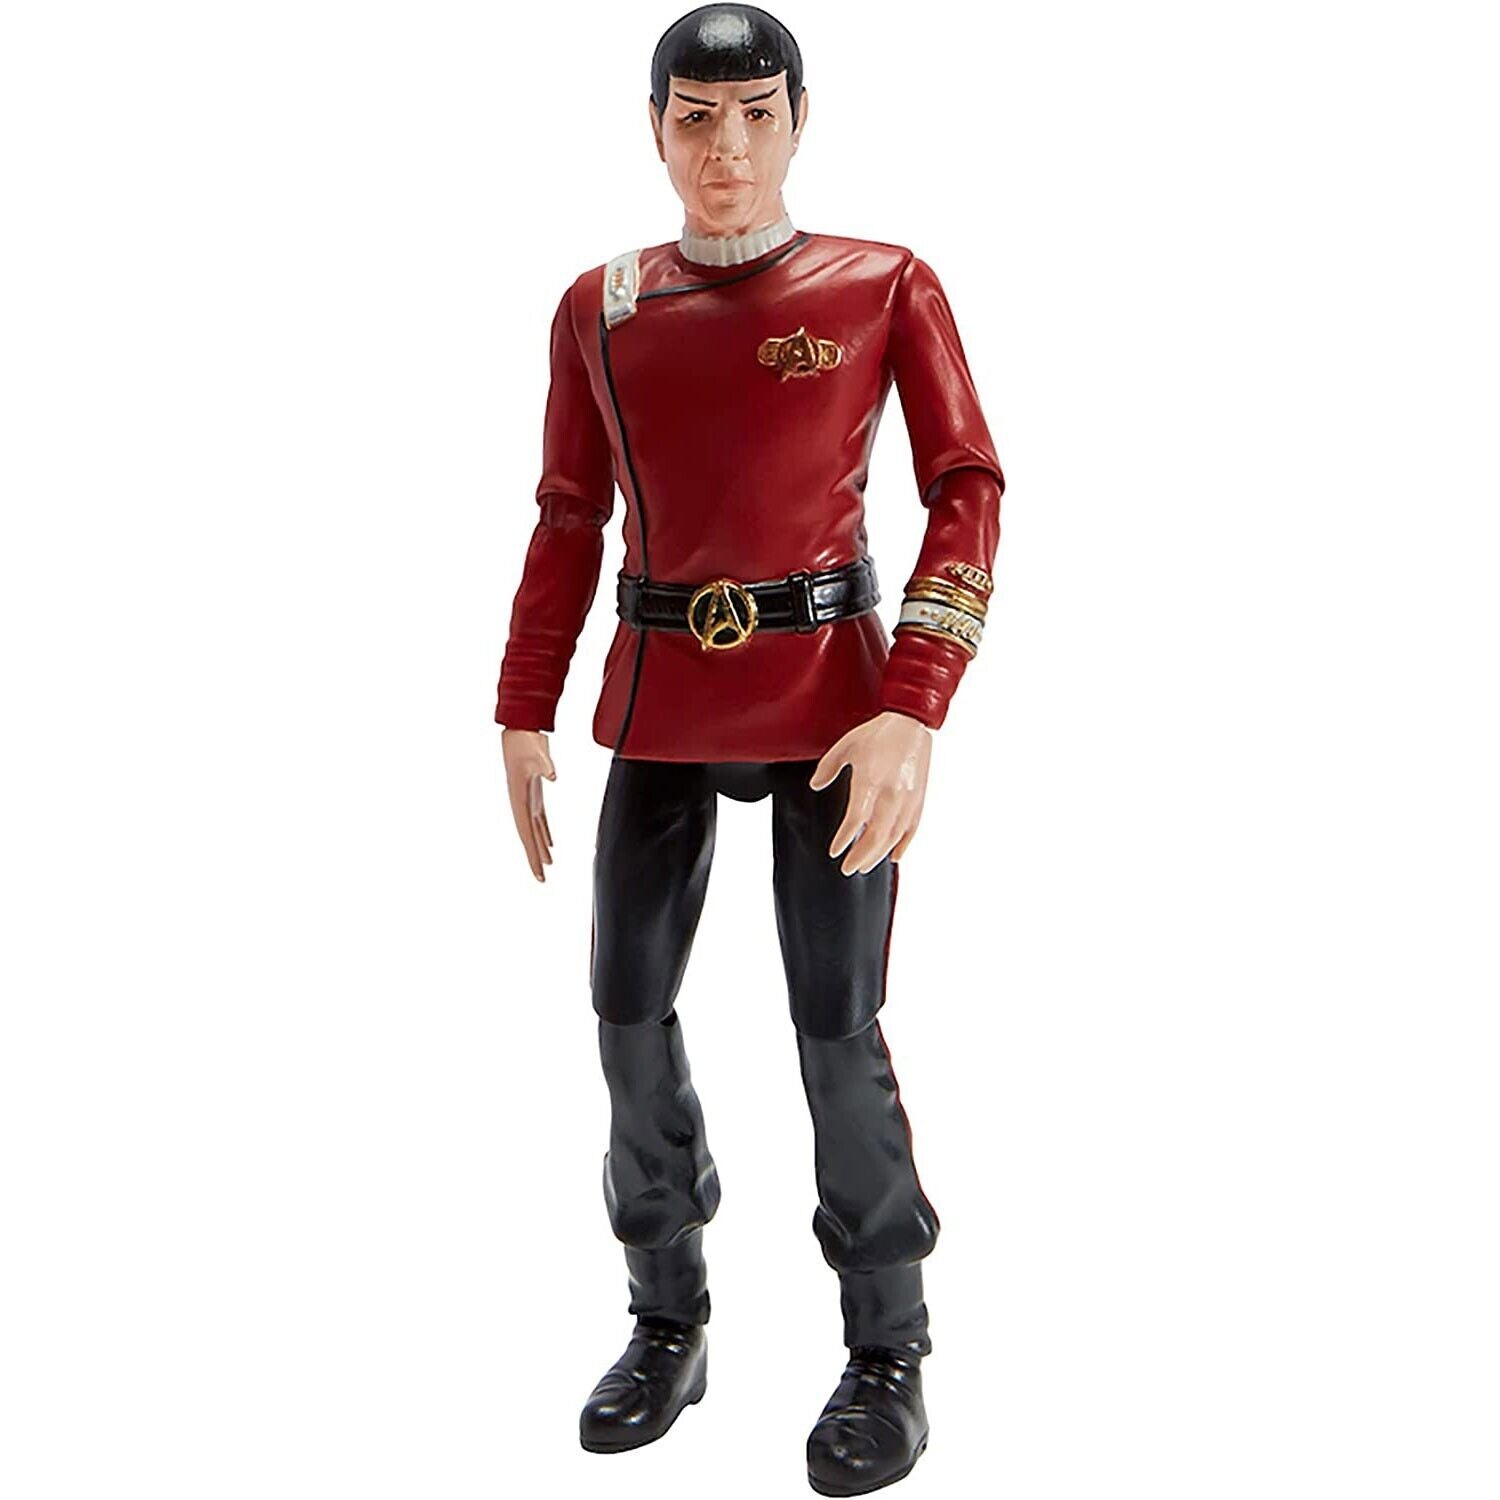 Star Trek Universe 5-Inch Captain Spock Figure (The Wrath of Khan)